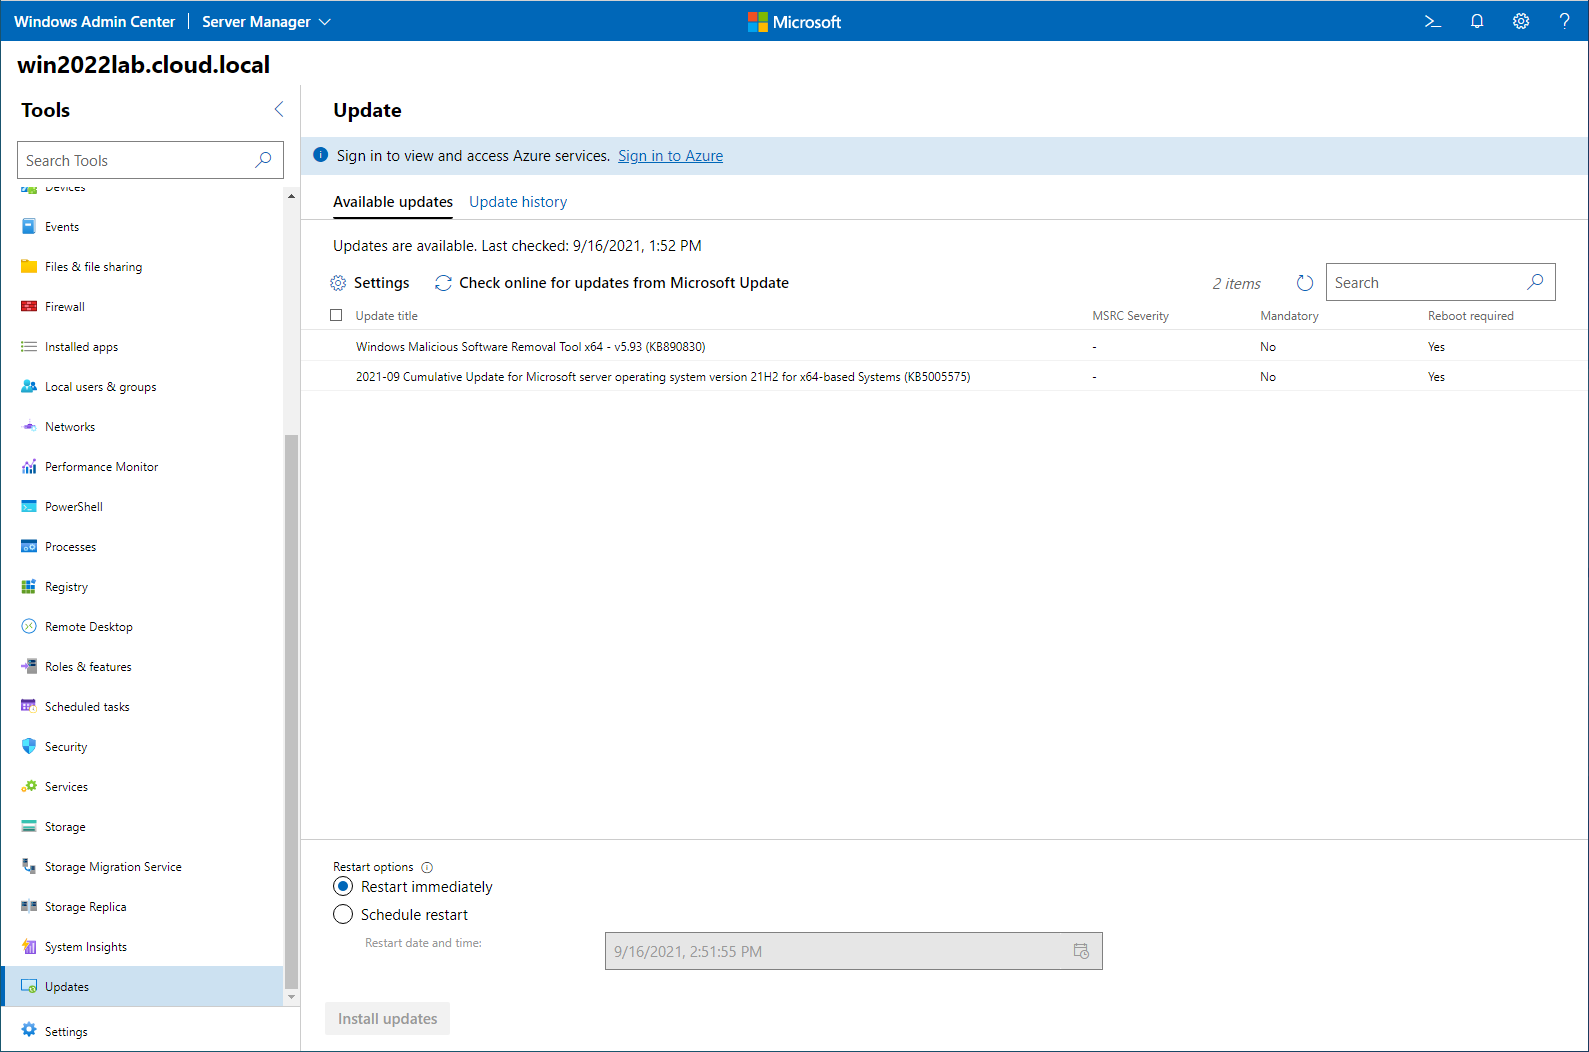 Manage Windows Updates using Windows Admin Center